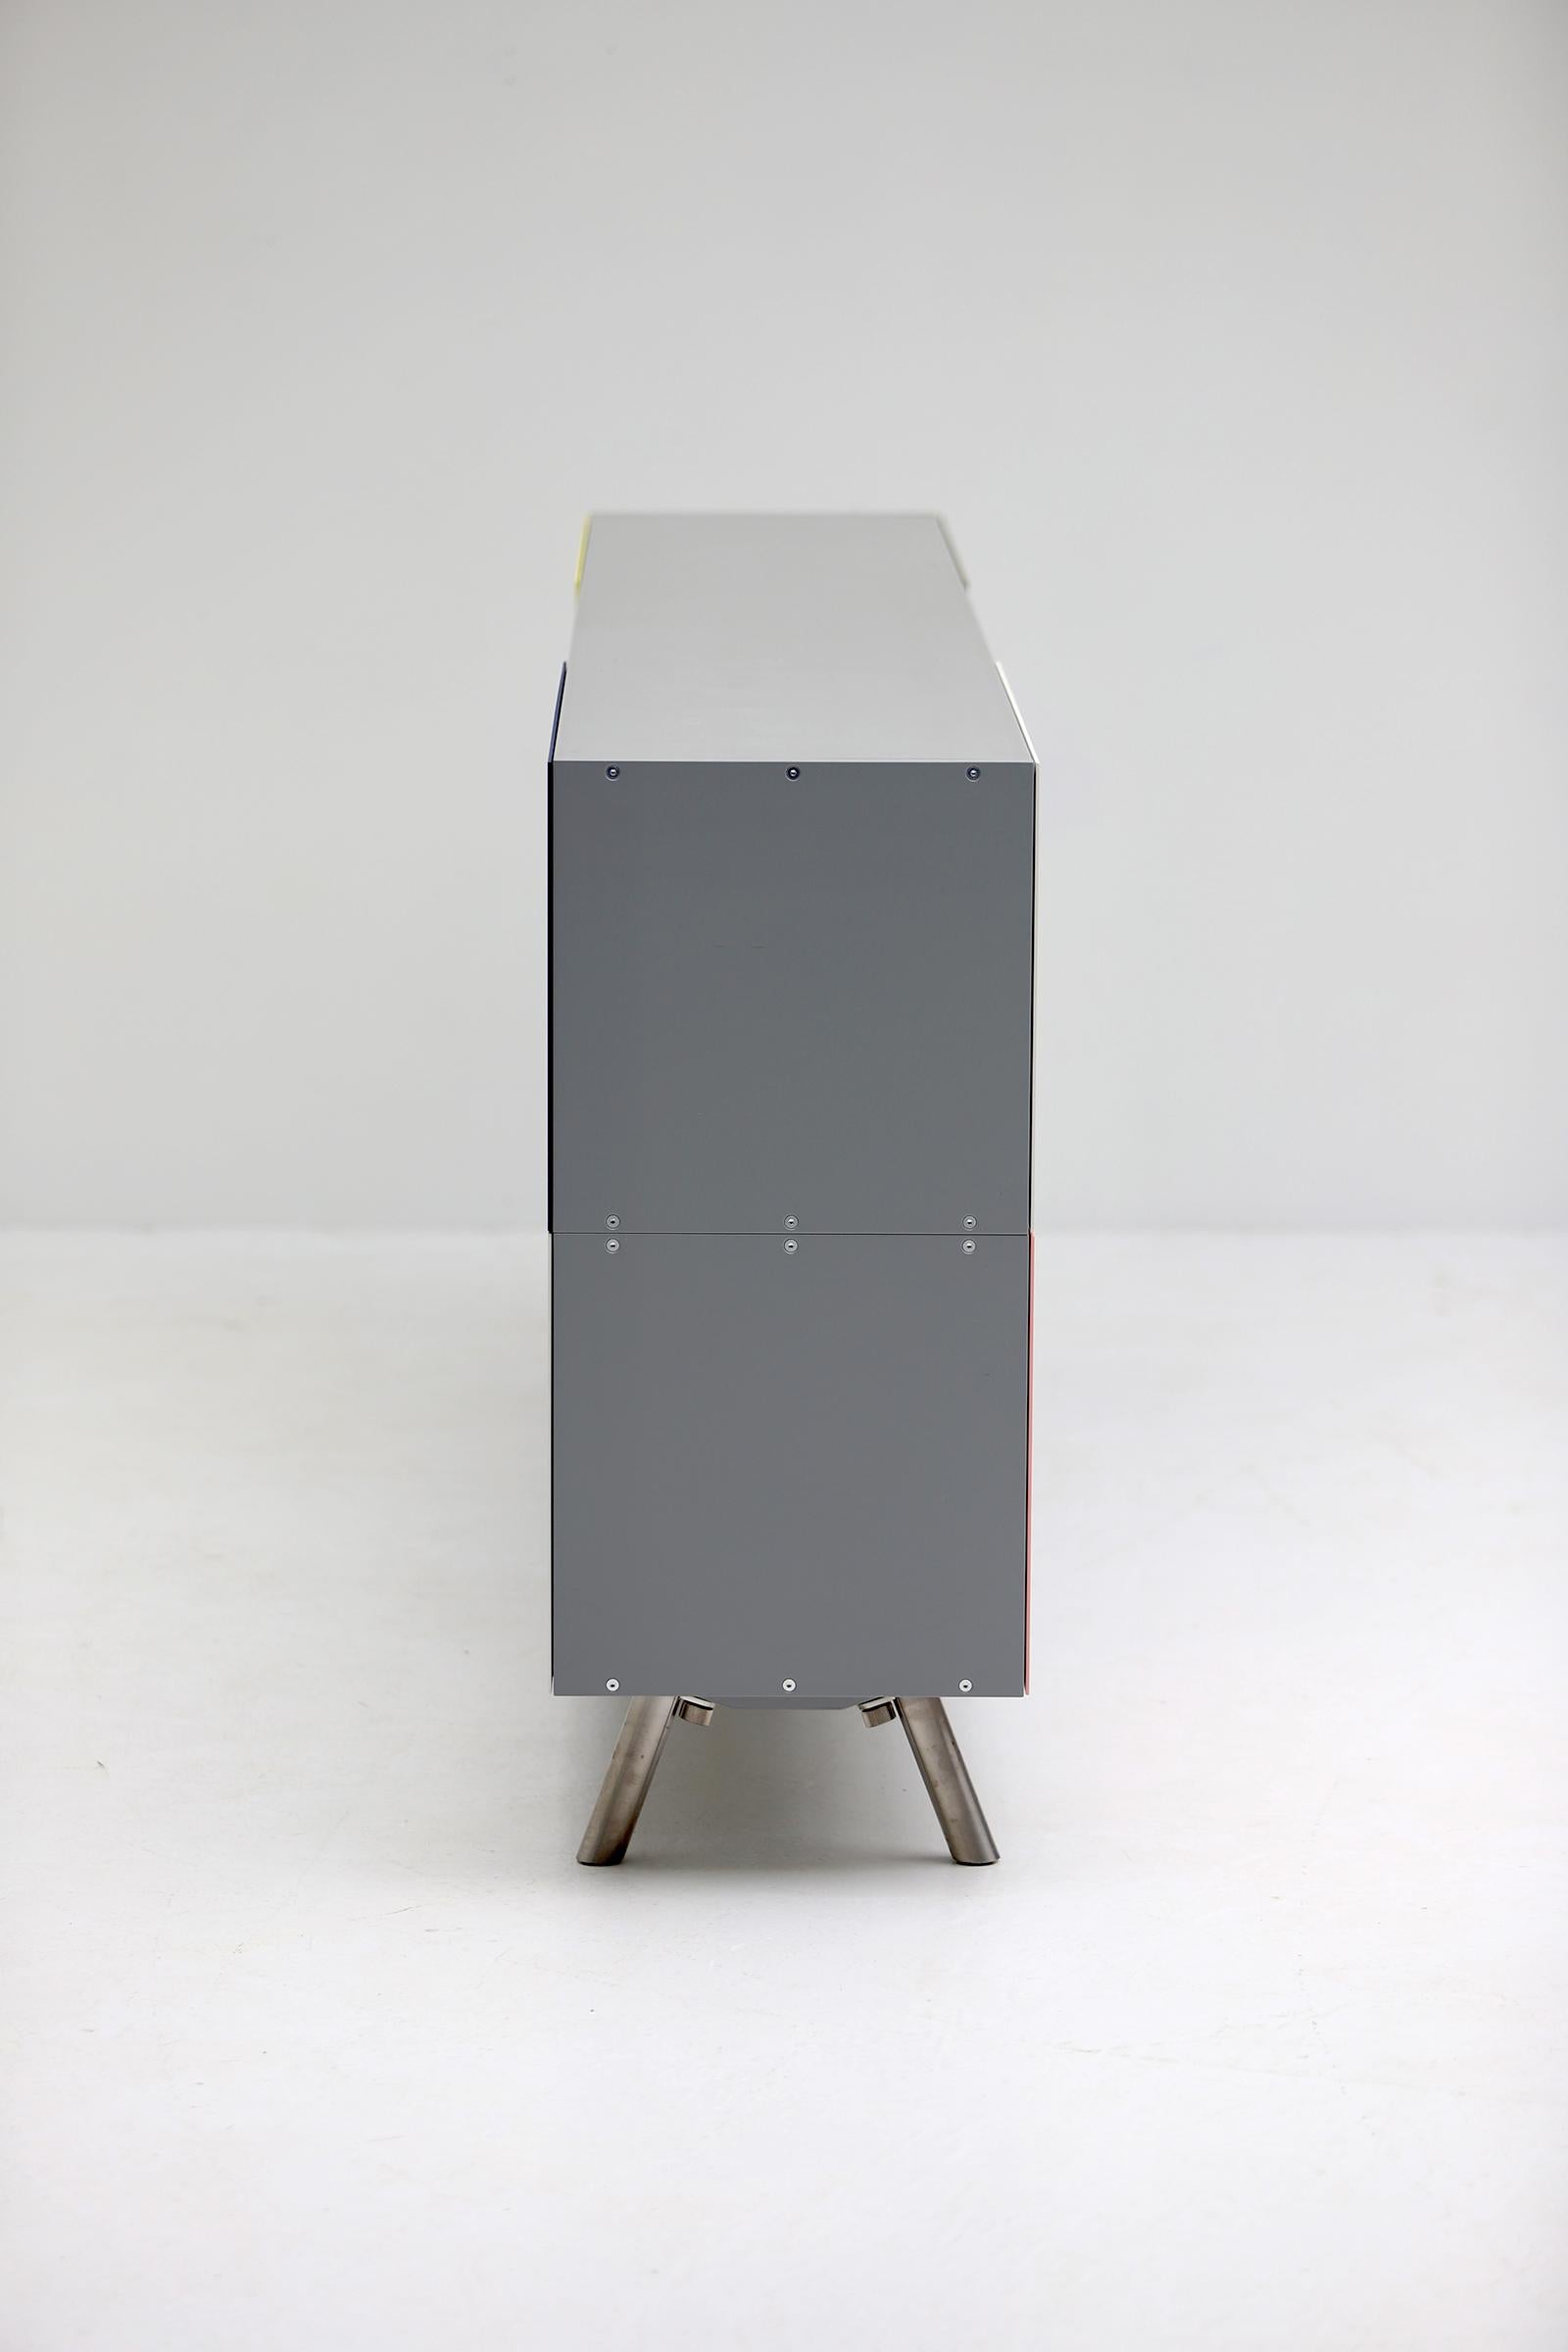 Modern aluminium sideboard by Maarten Van Severen model Hk-2 Kast for Vitra 2005 For Sale 16